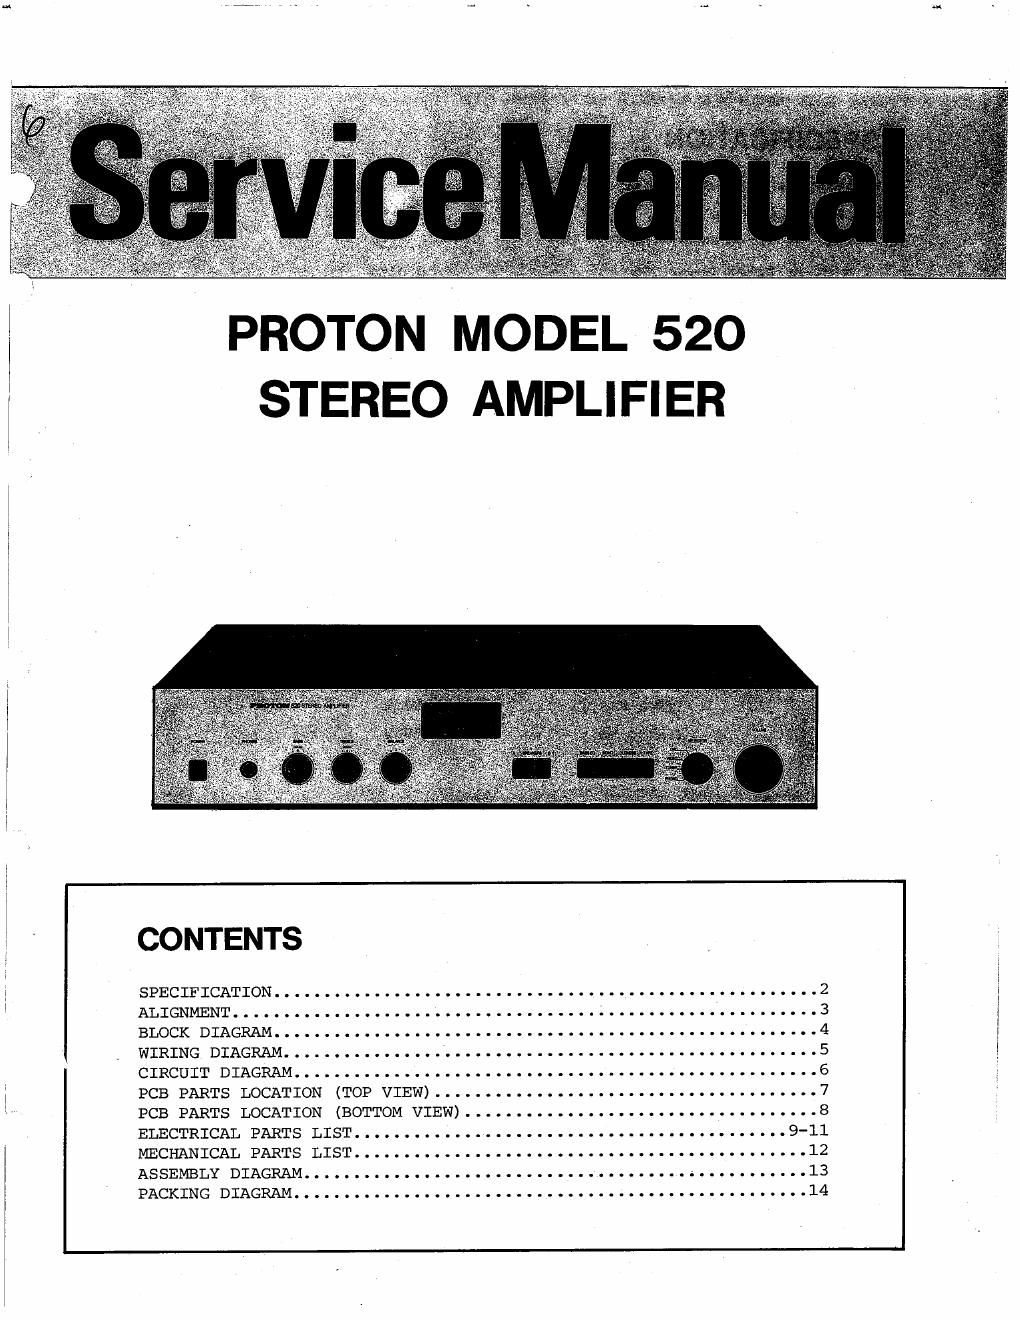 proton 520 service manual